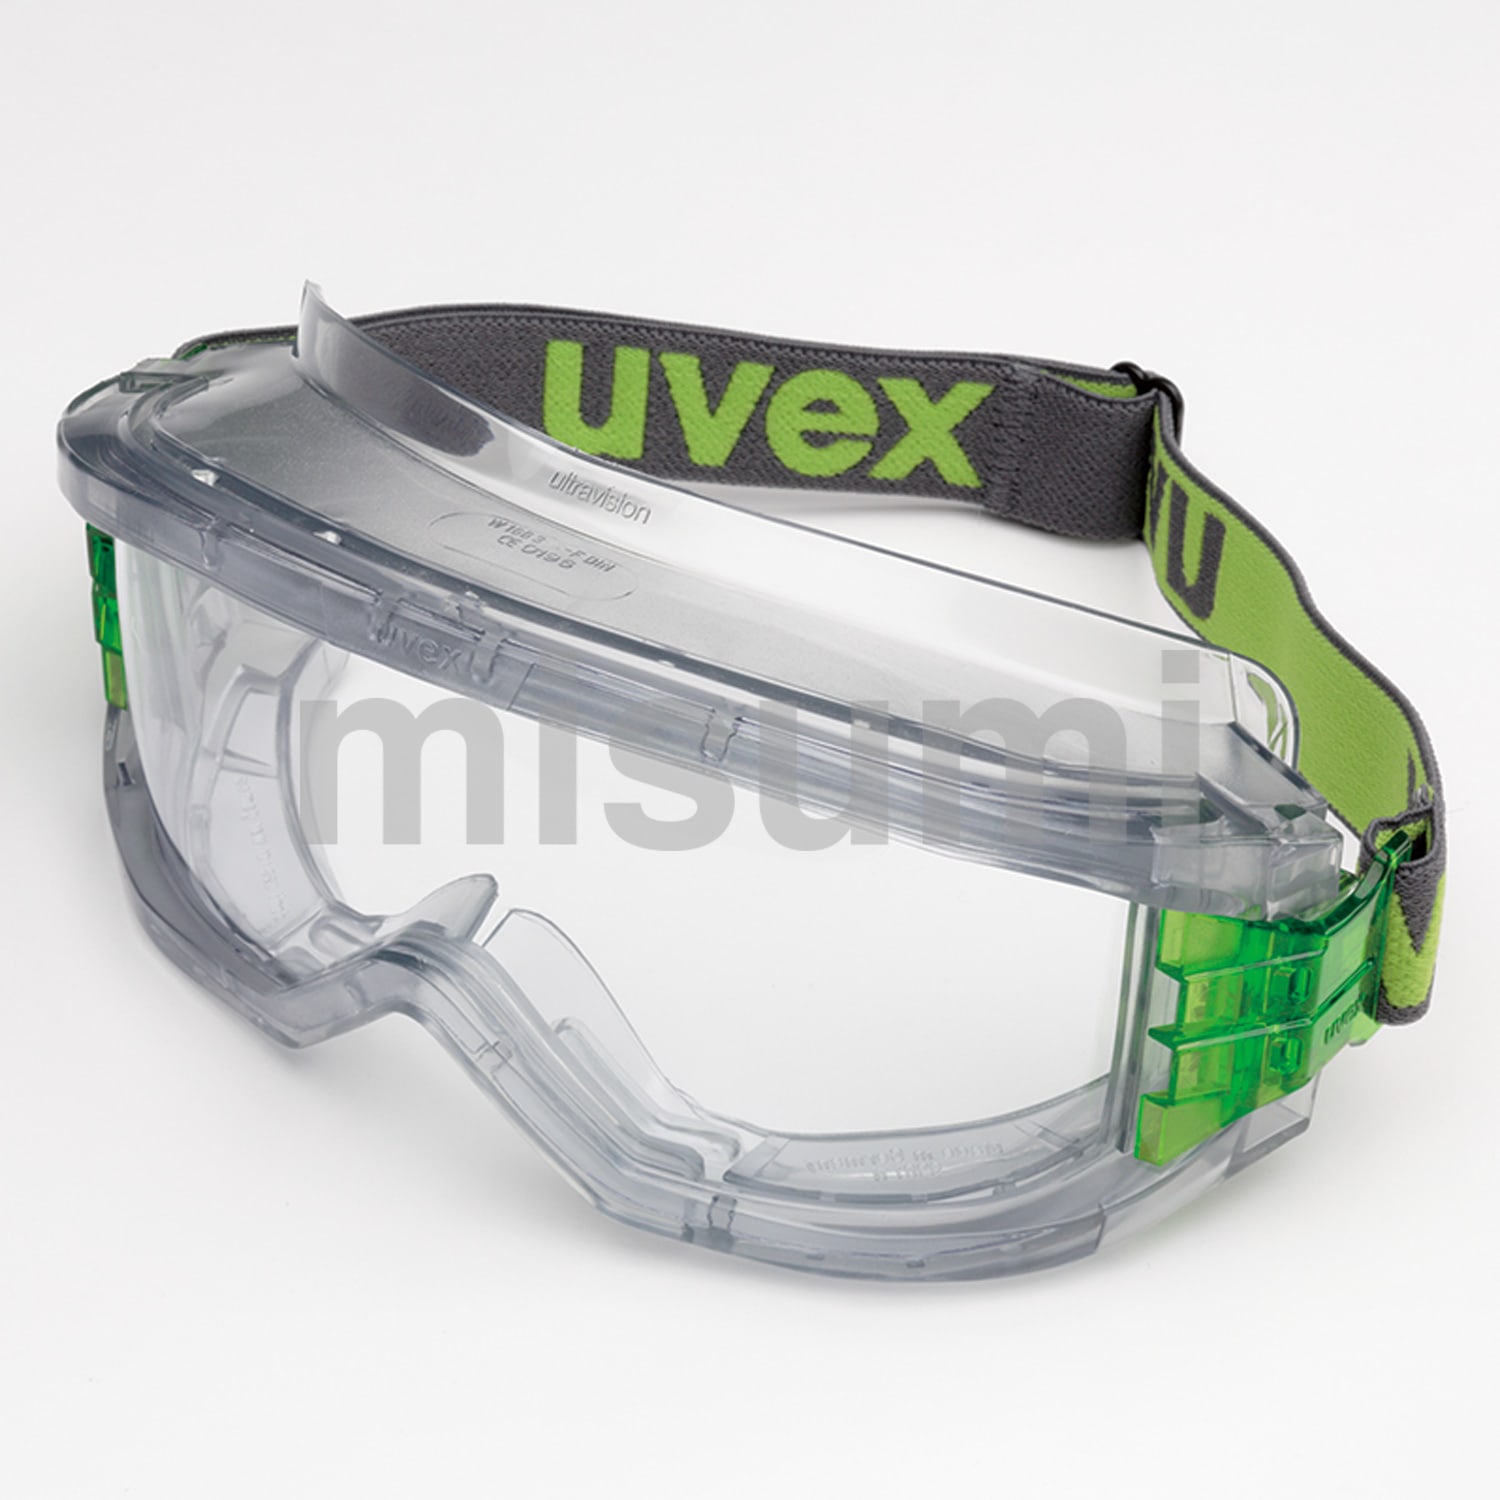 uvex フィノミック プロ L 1双 6006269 - 安全・保護用品